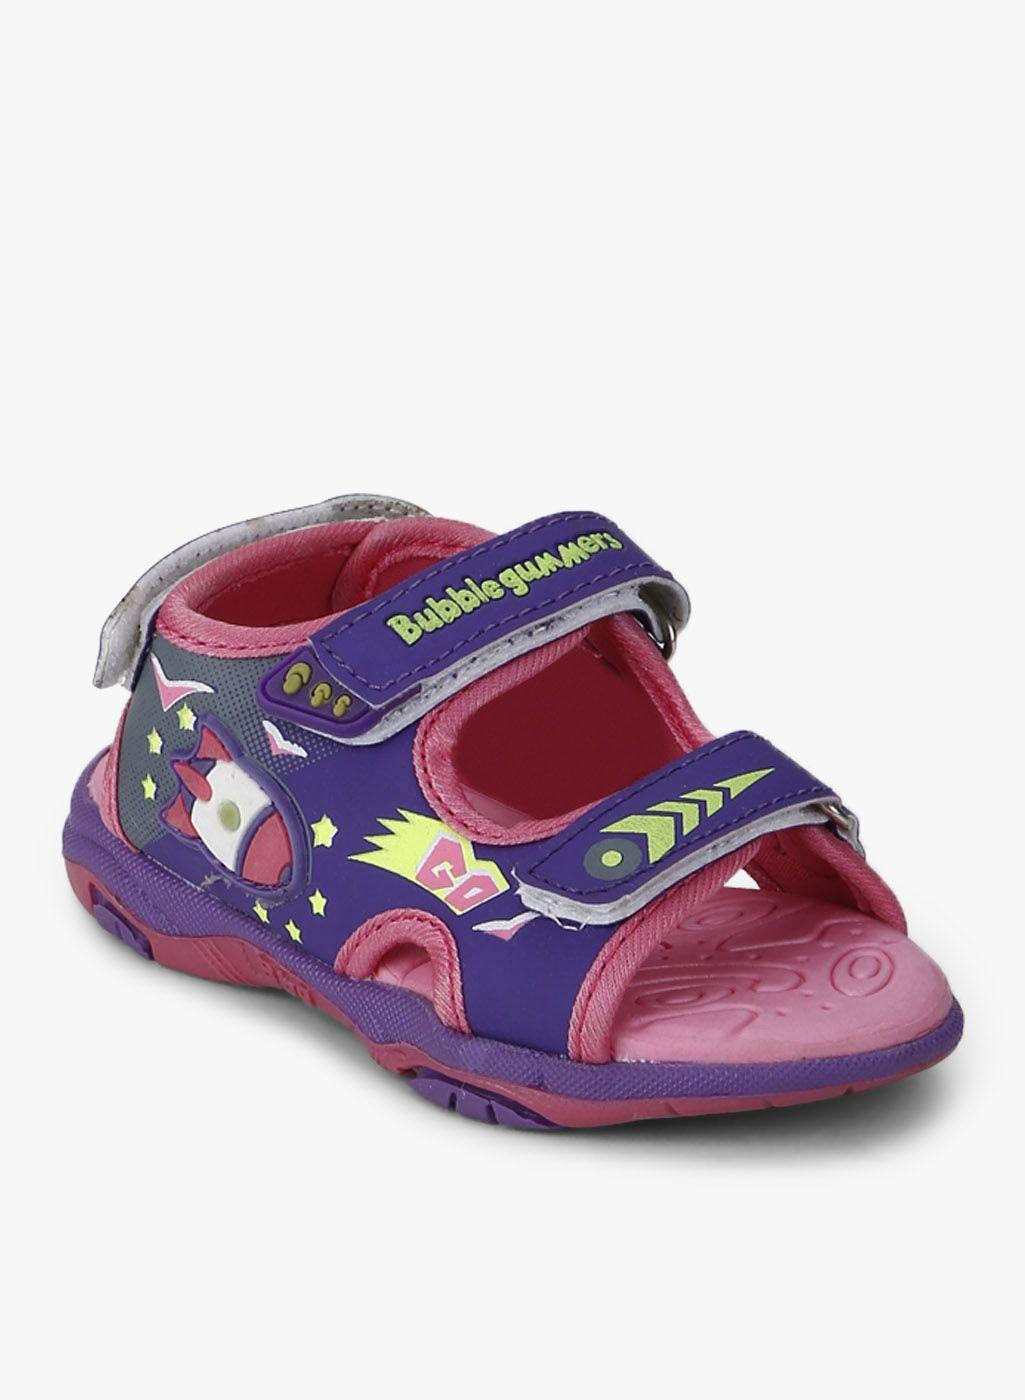 bubblegummers-boys-purple-printed-sports-sandals